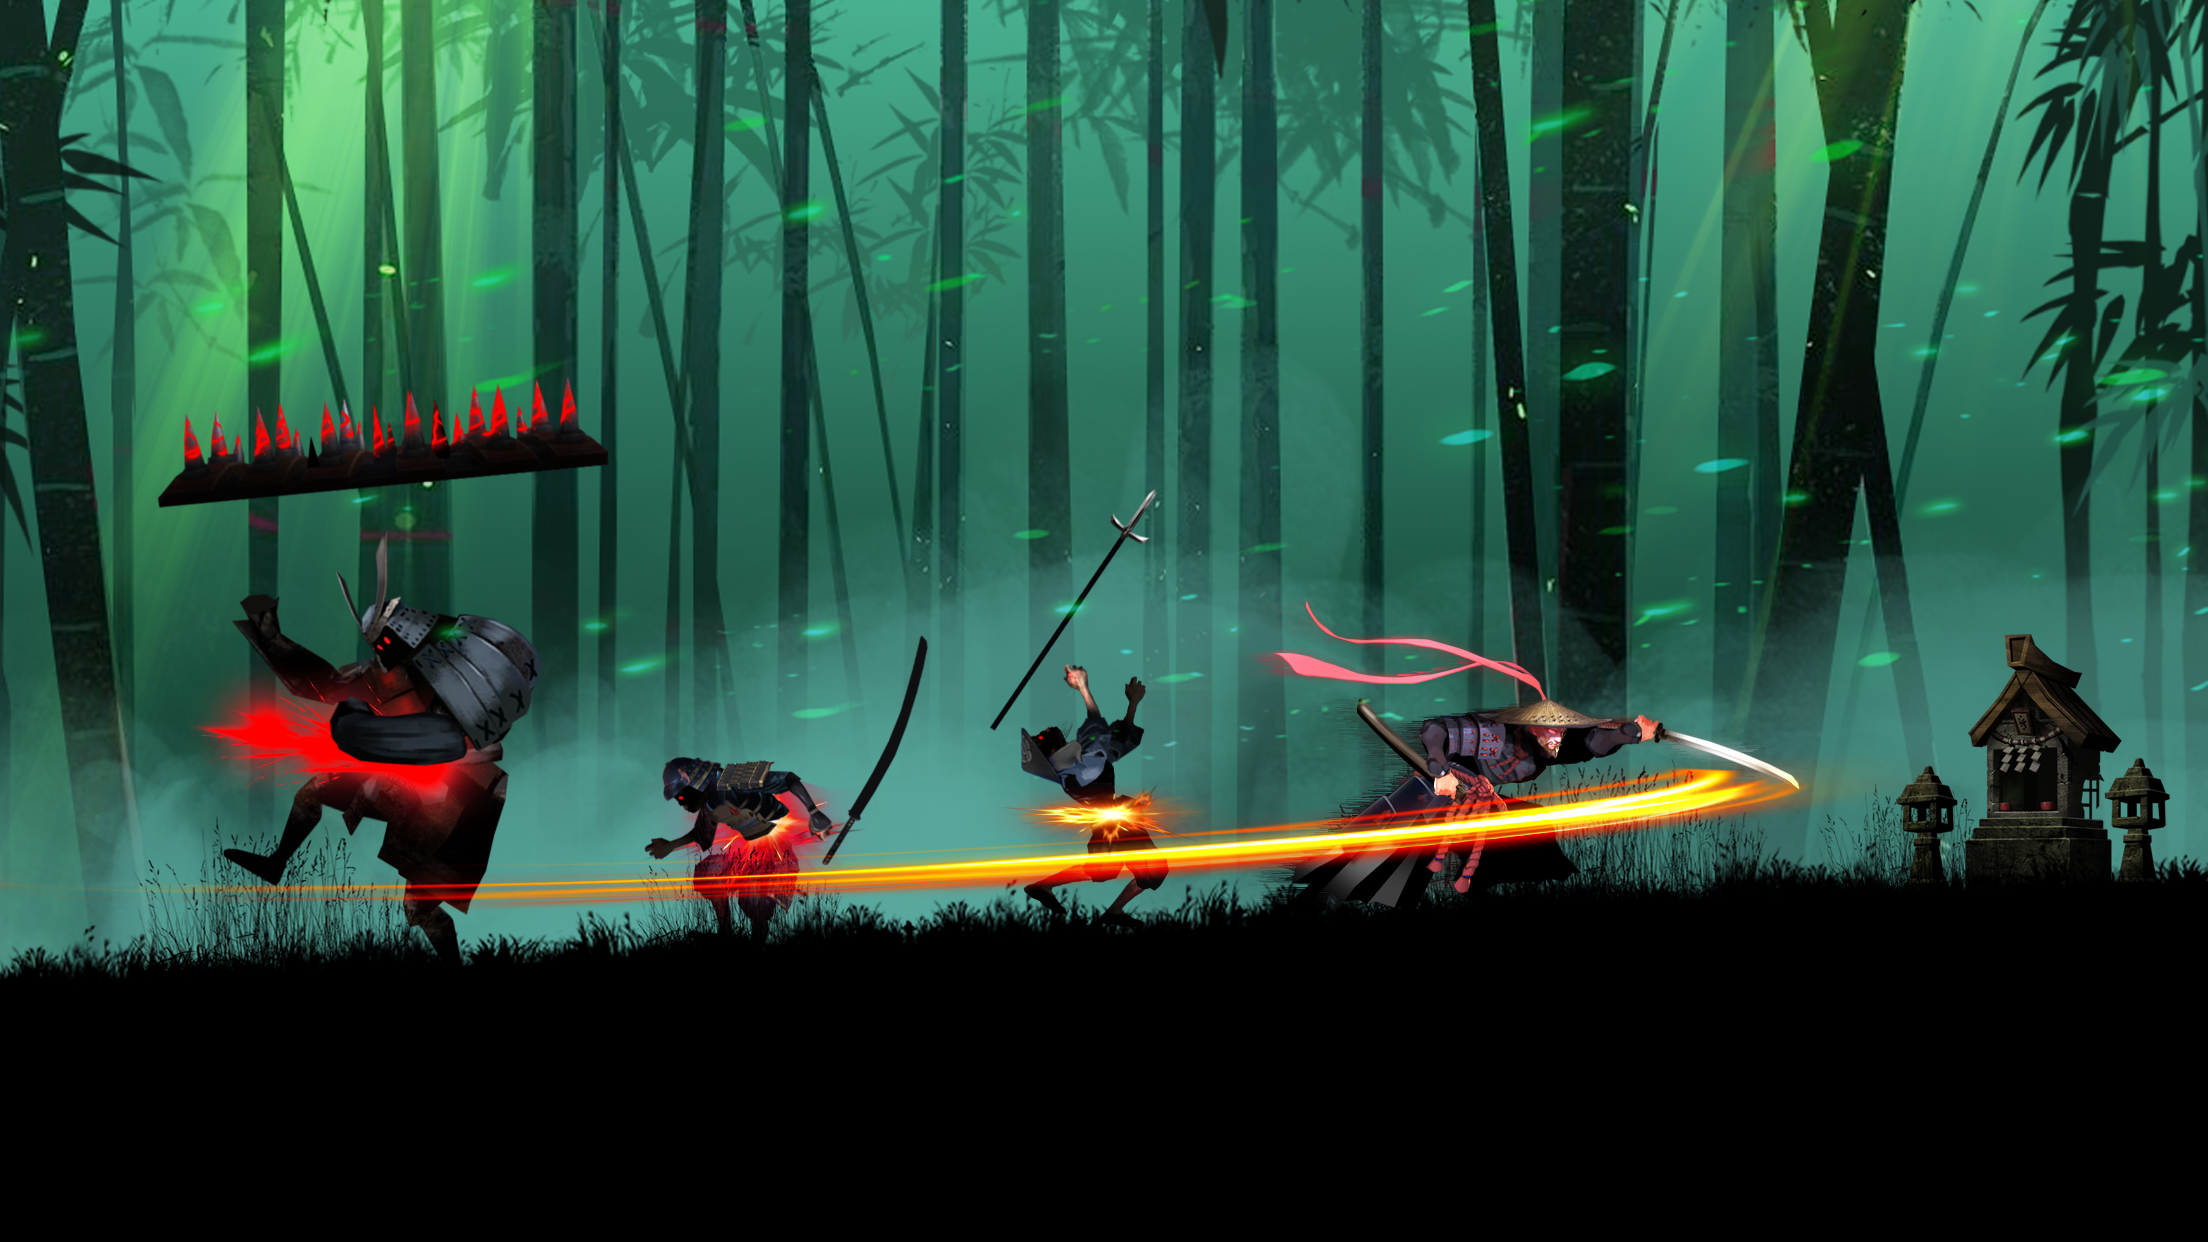 Screenshot 1 of Ninja Warrior 2: Warzone at RPG 1.61.1